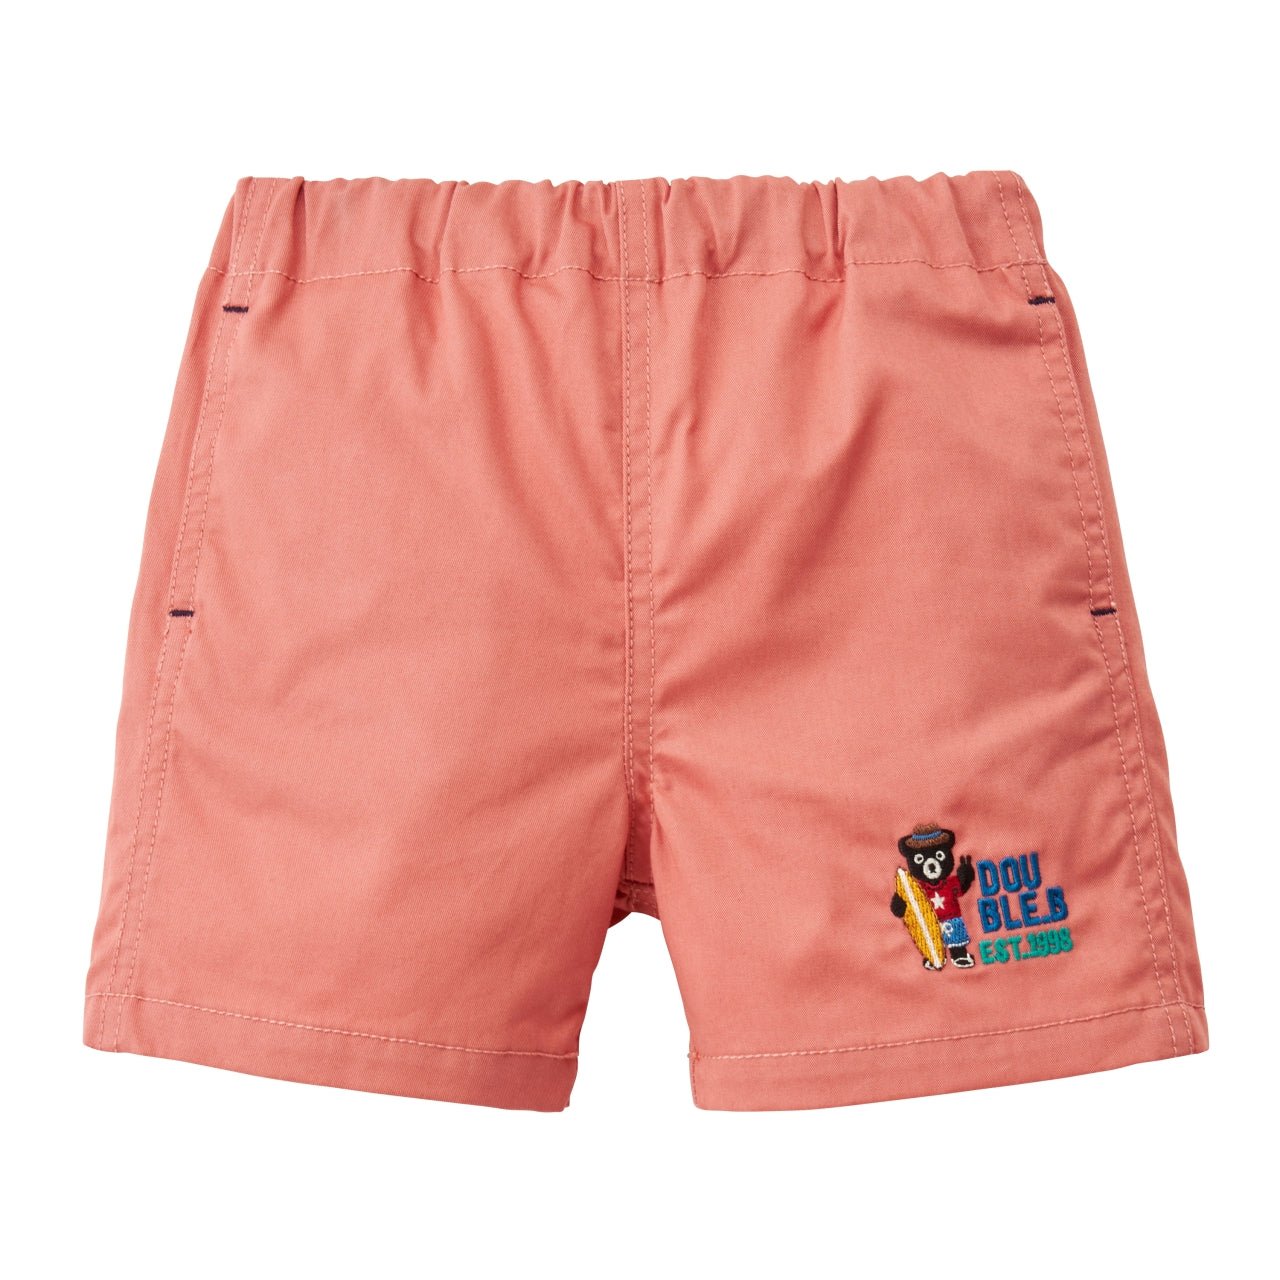 Mr. B Island Shorts - 60-3105-571-12-80